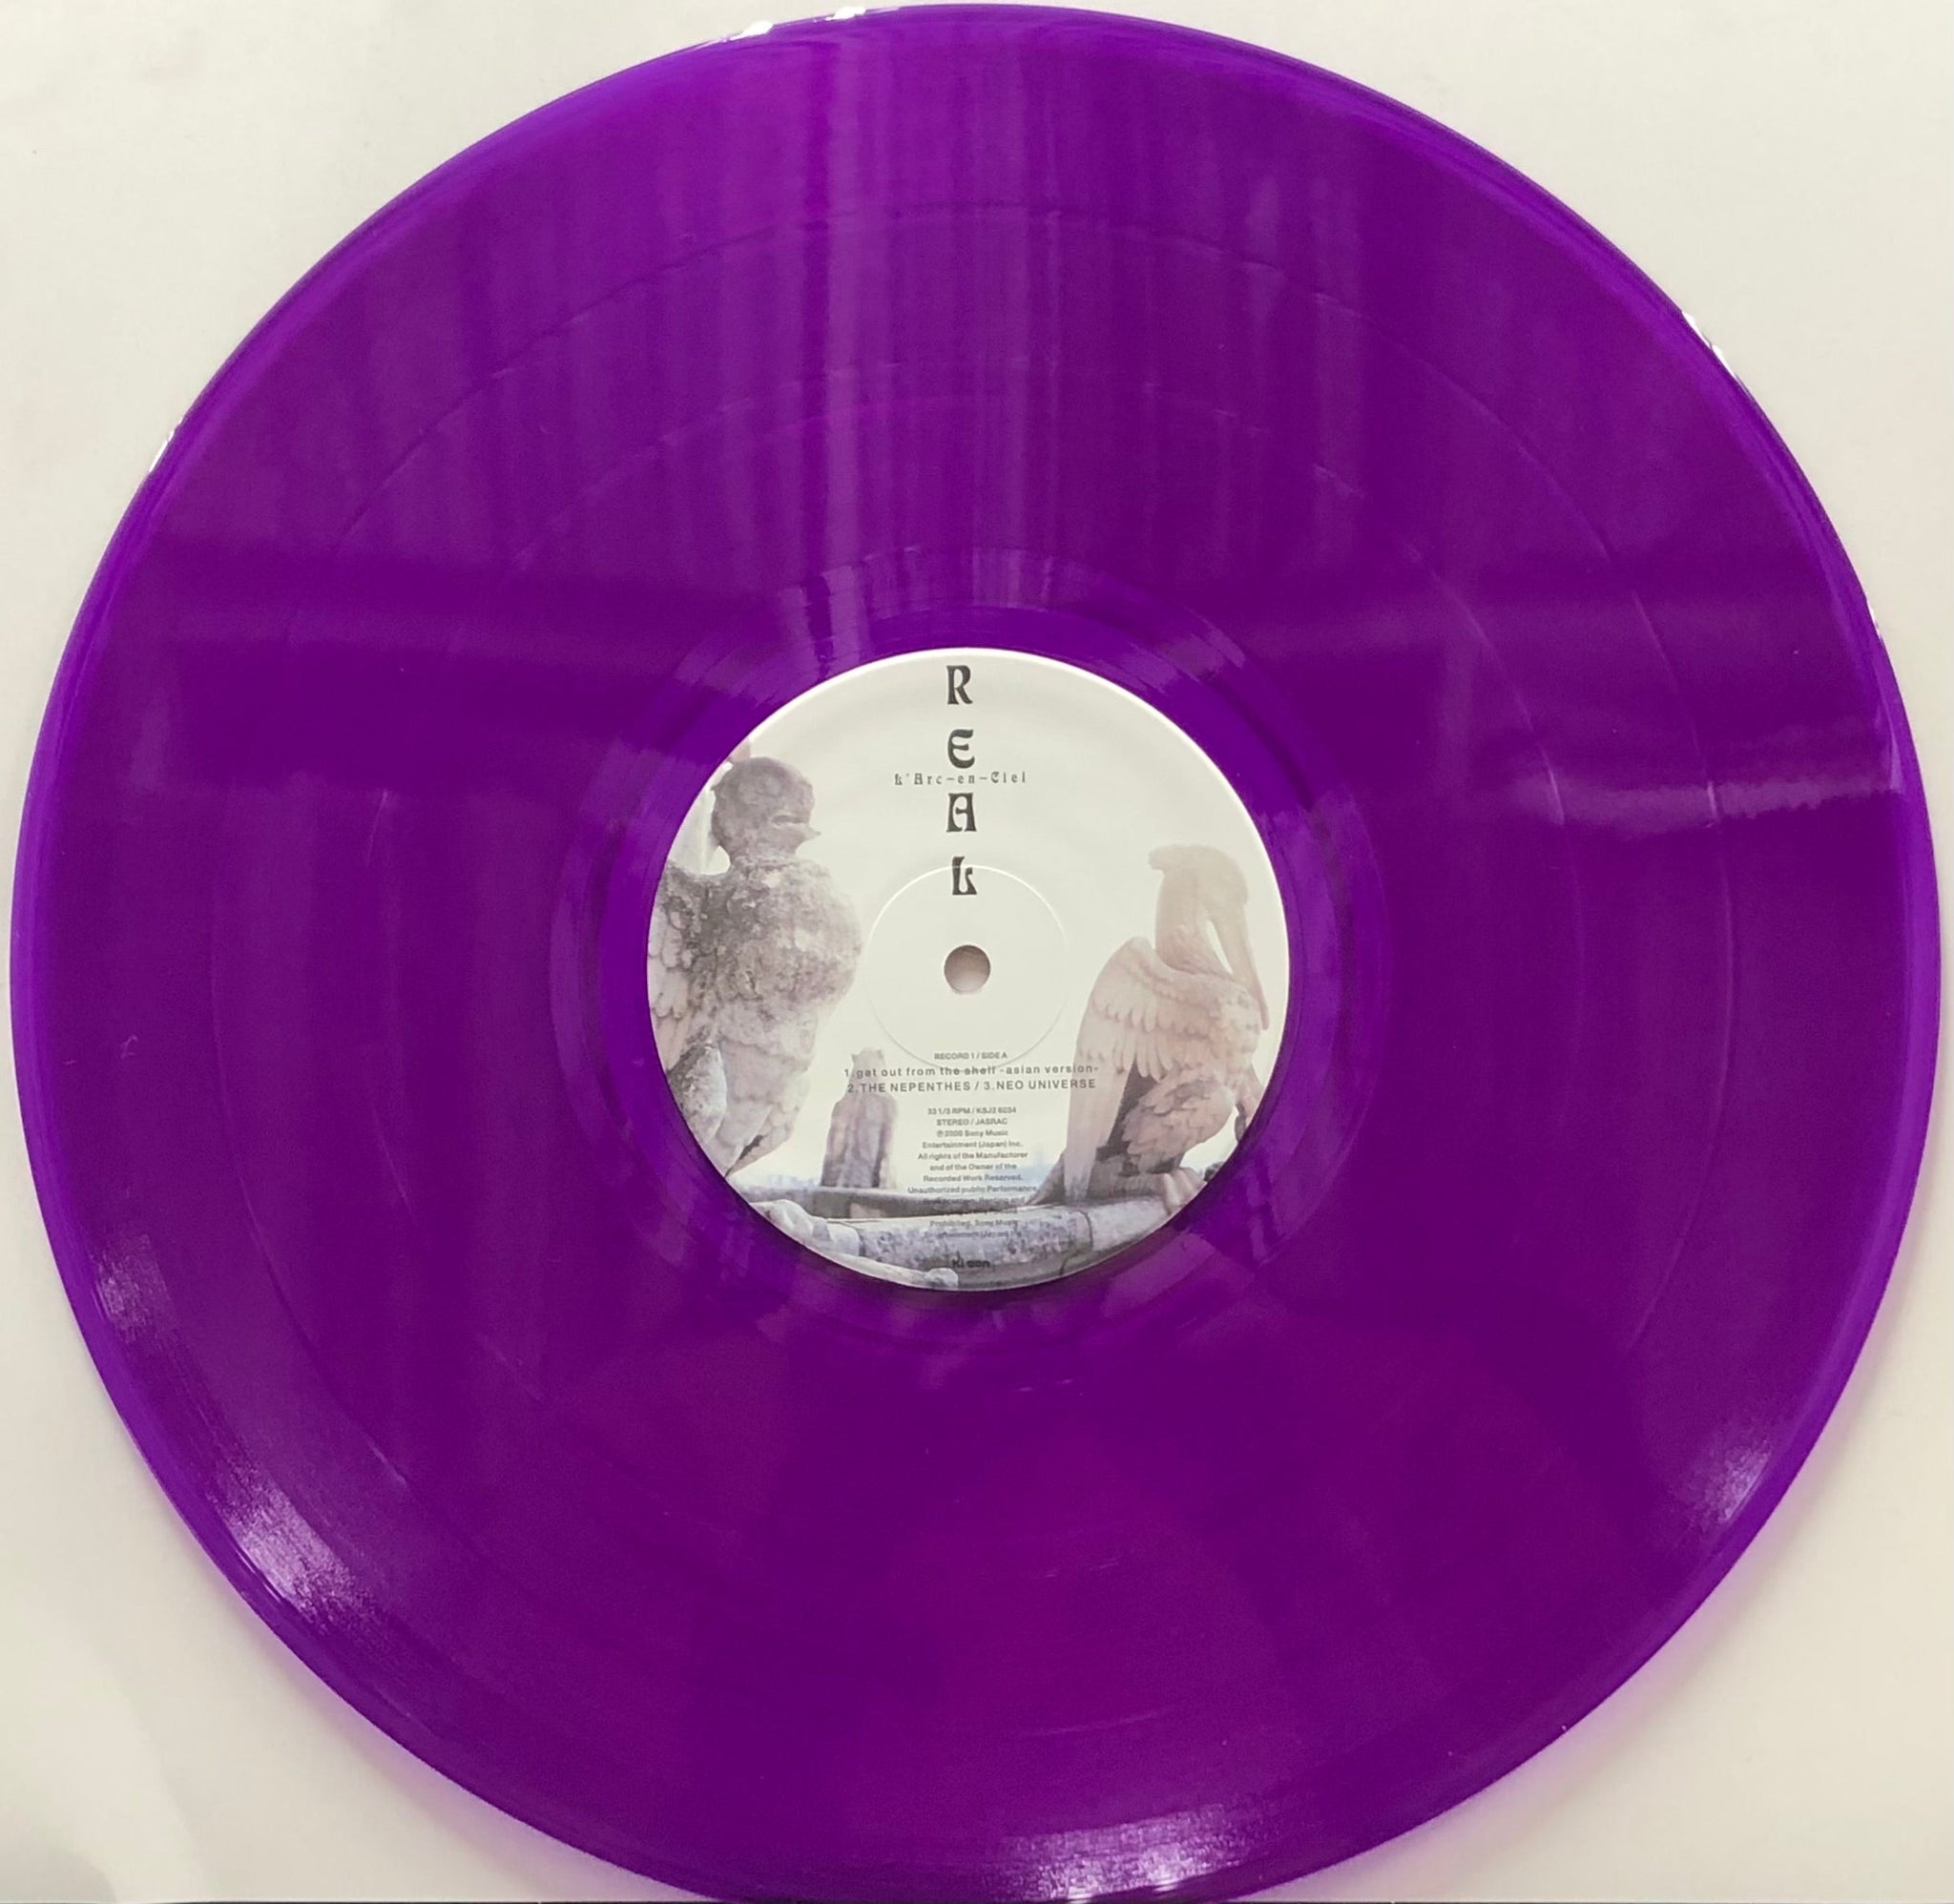 L'Arc〜en〜Ciel ラルク アン シエル / Real (Purple Vinyl) (Ki/oon 